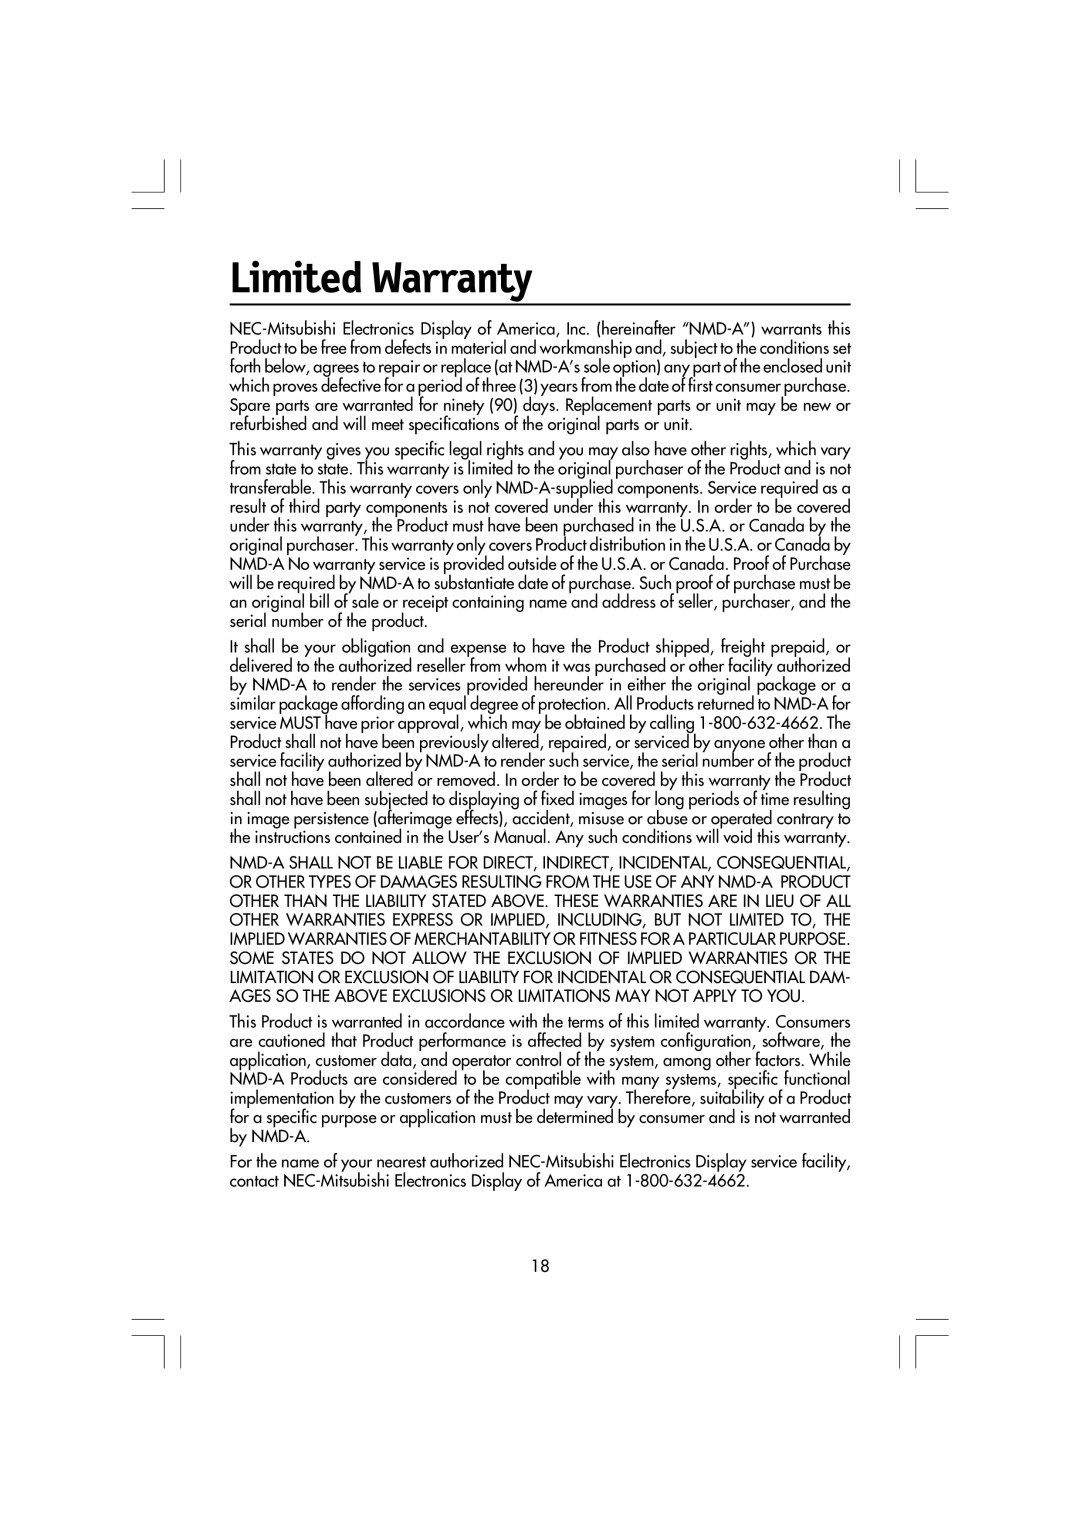 Mitsubishi Electronics LCD1560M manual Limited Warranty 